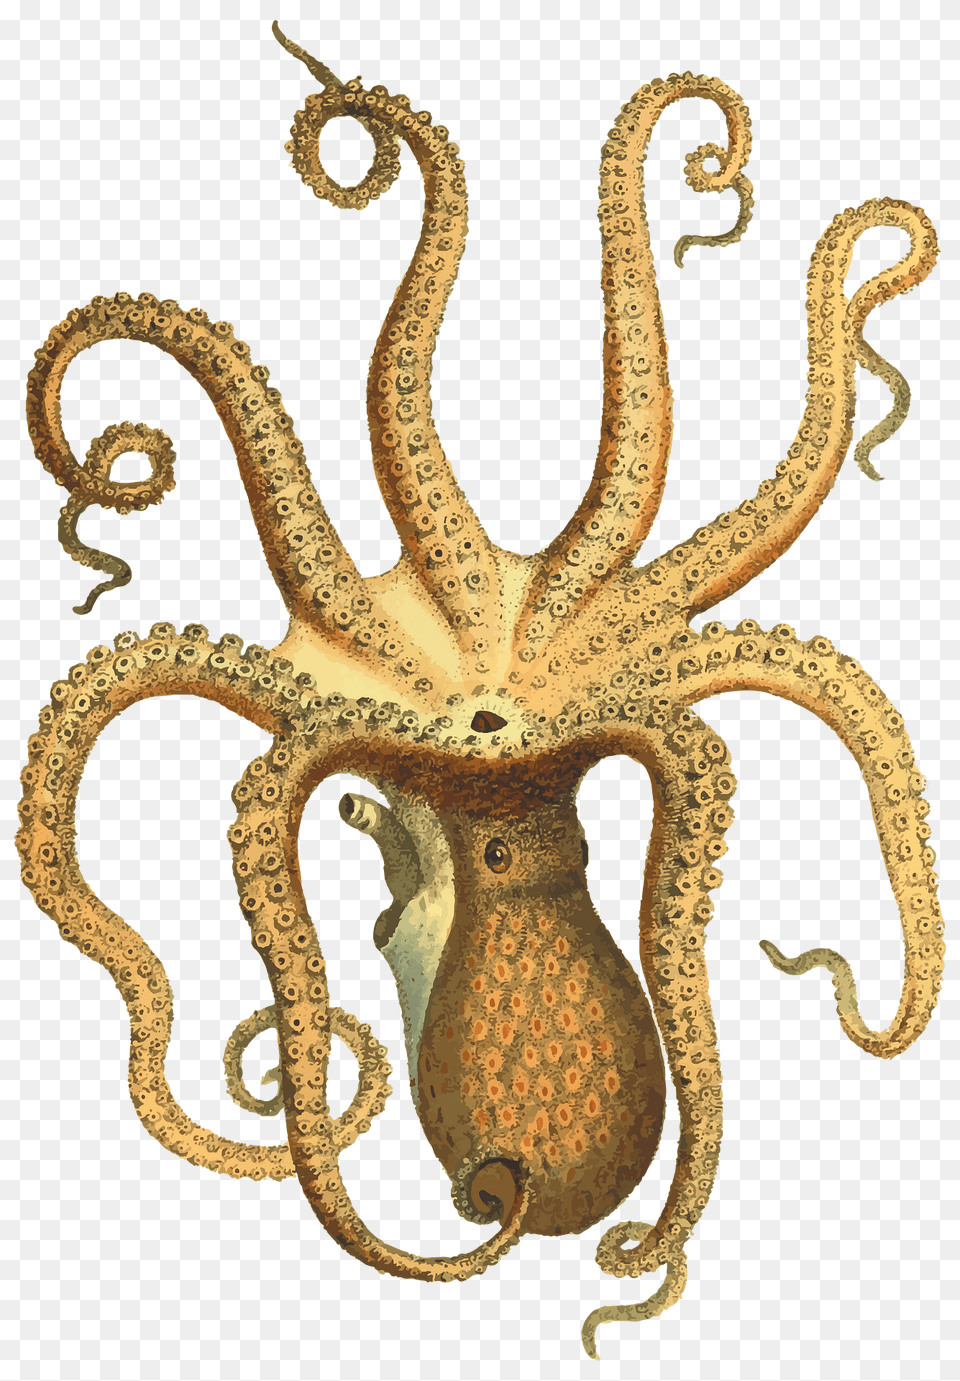 Vintage Octopus Clipart, Animal, Sea Life, Invertebrate, Reptile Png